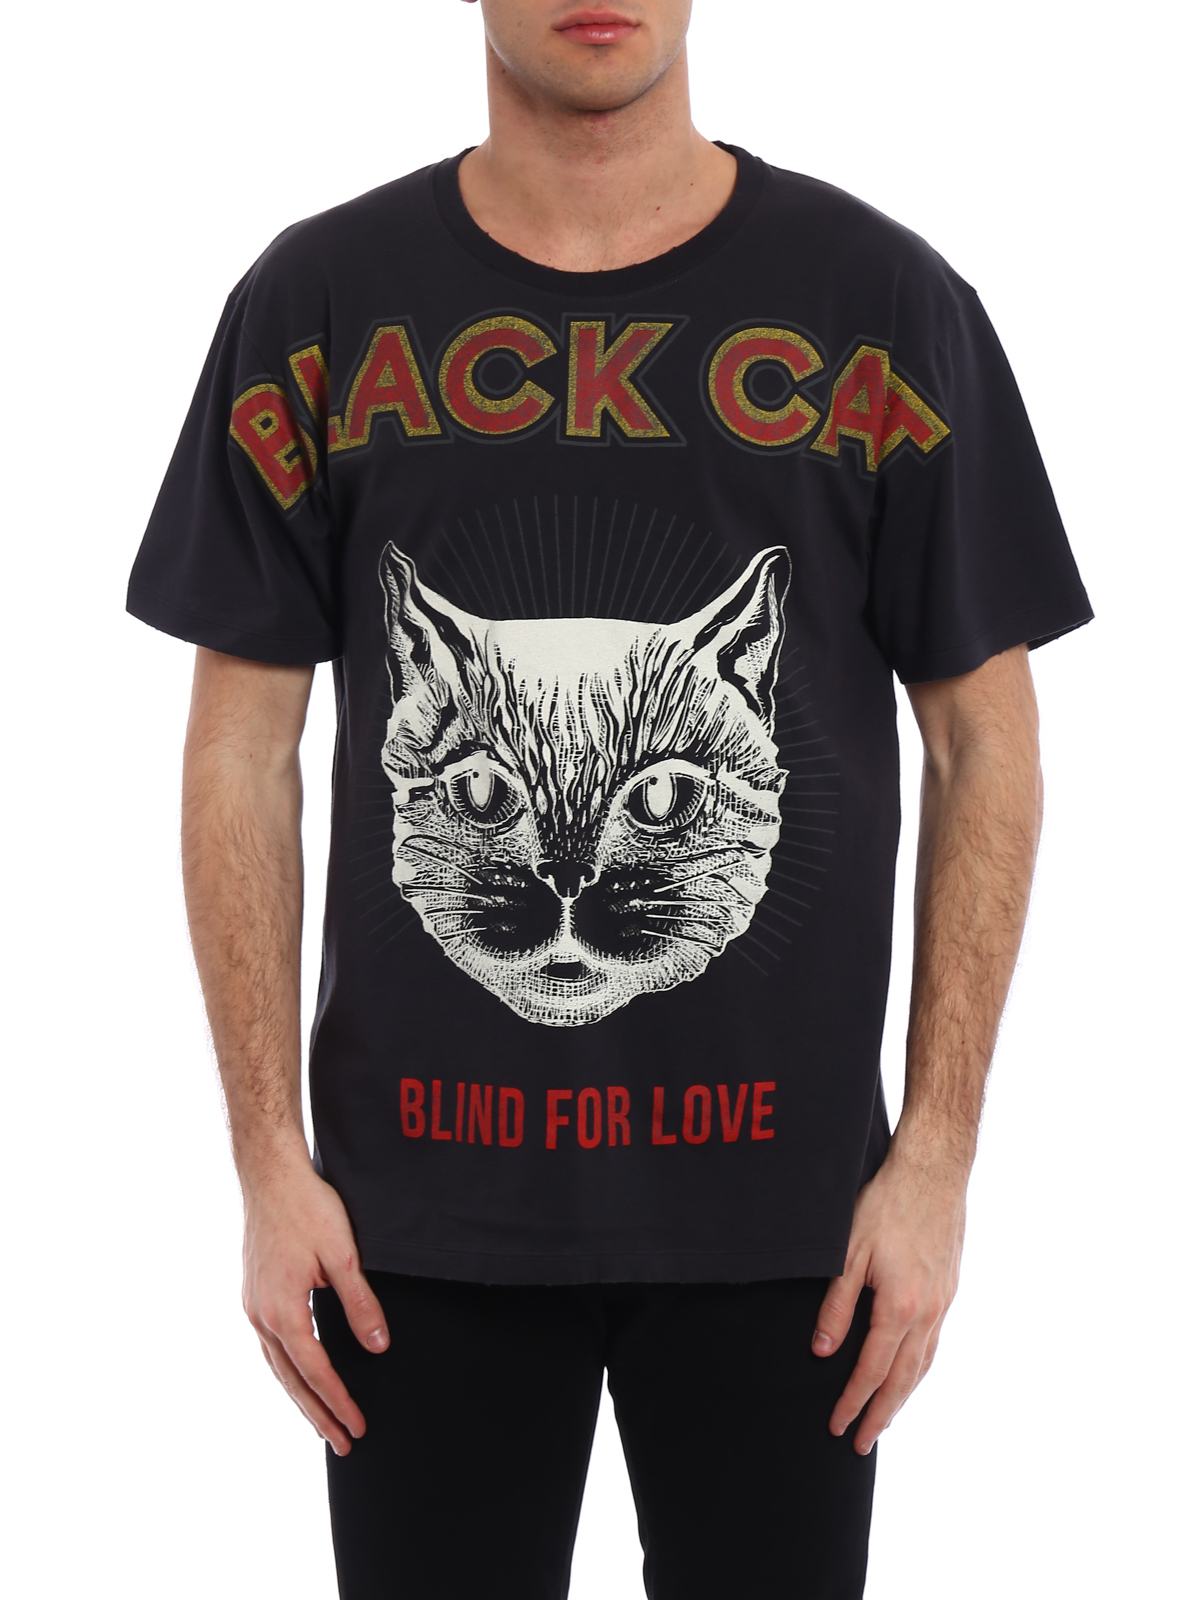 black cat shirt gucci